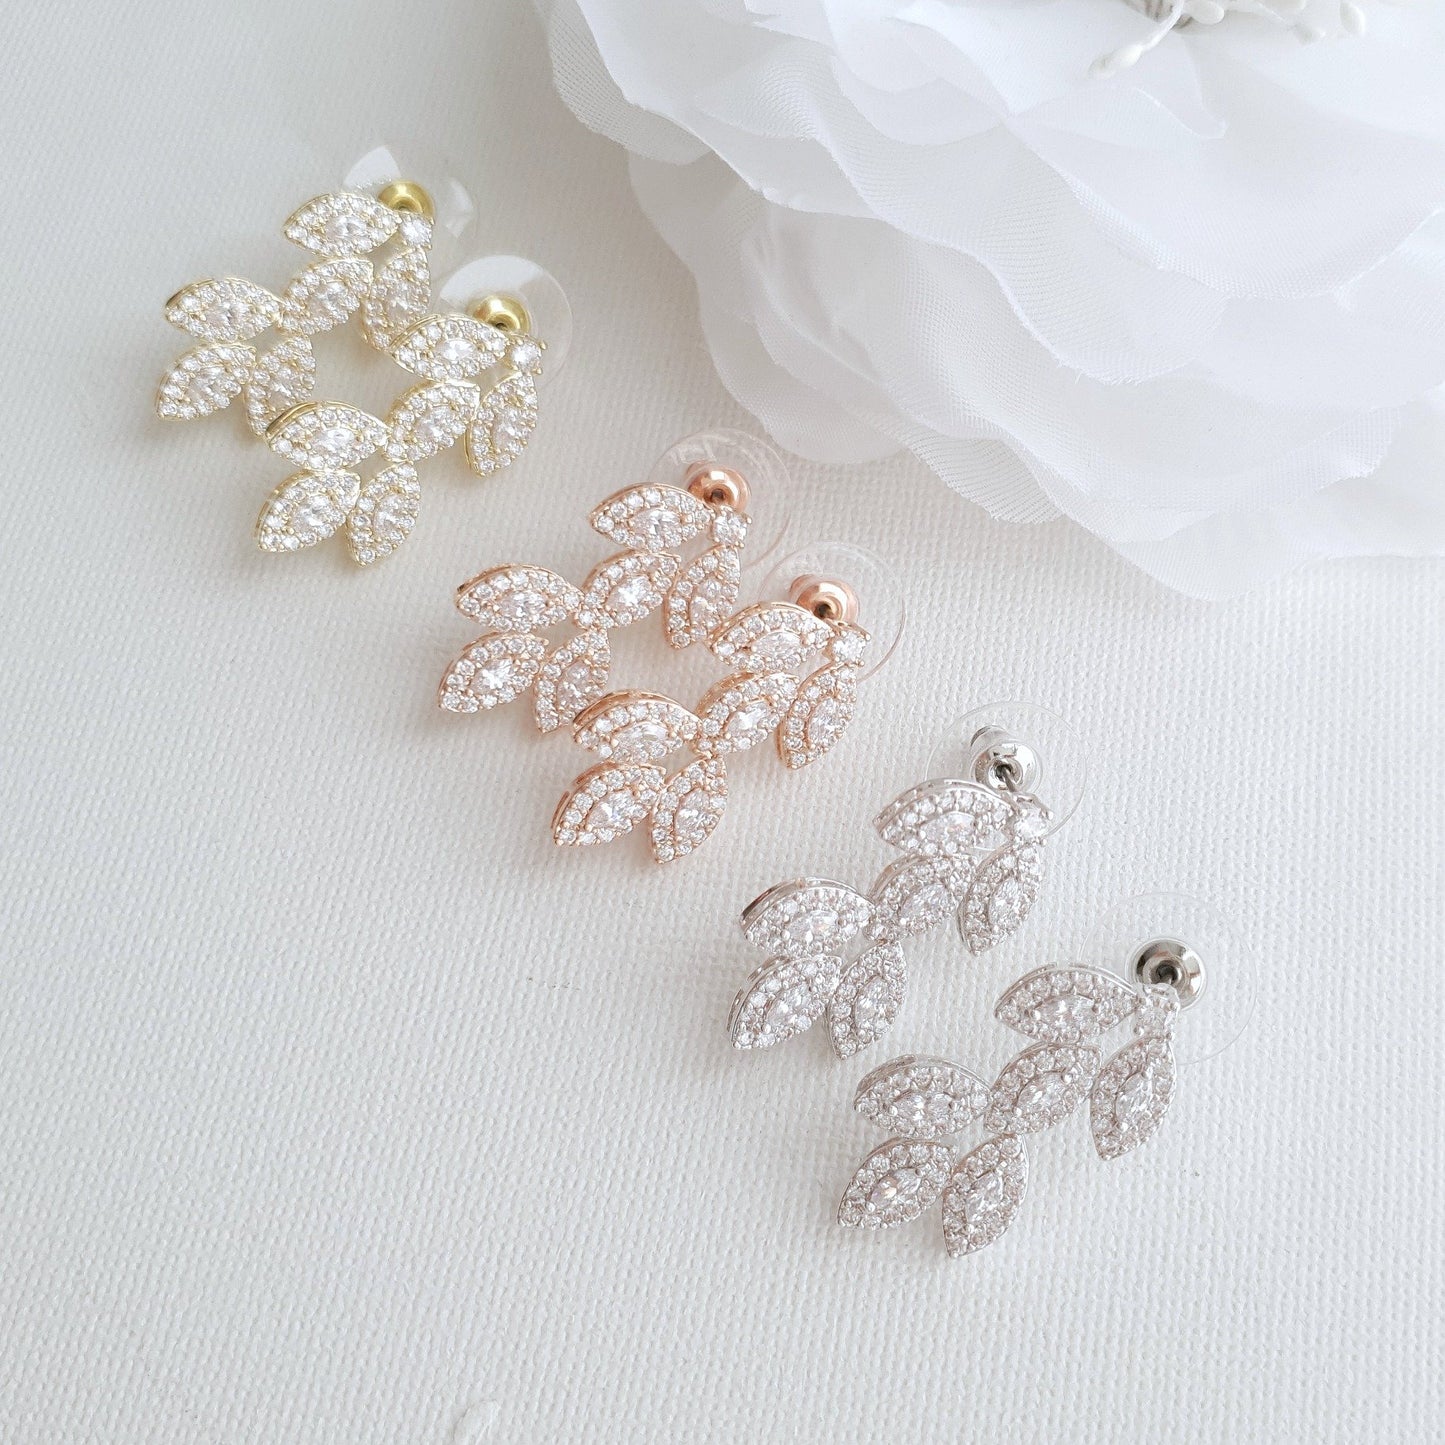 Bridal Jewelry Bracelet and Earrings Set-Abby